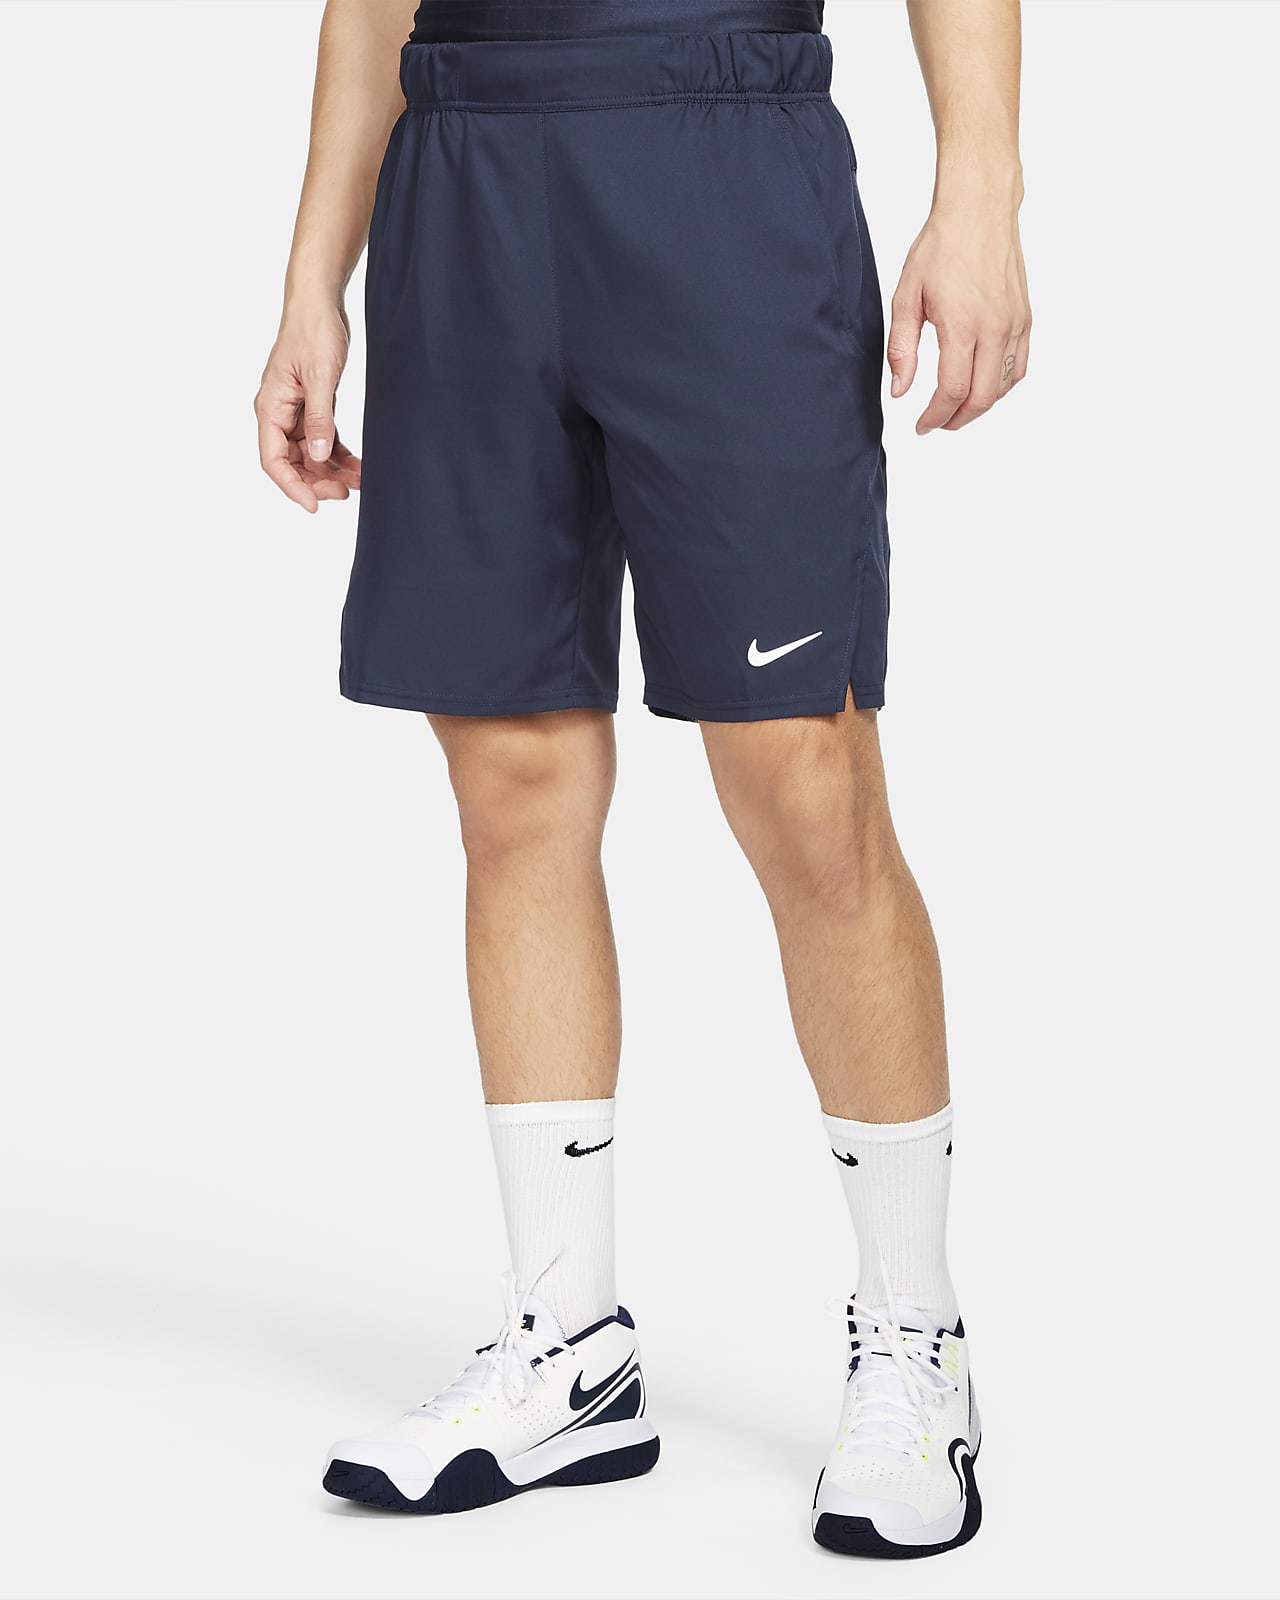 mens tennis shorts nike